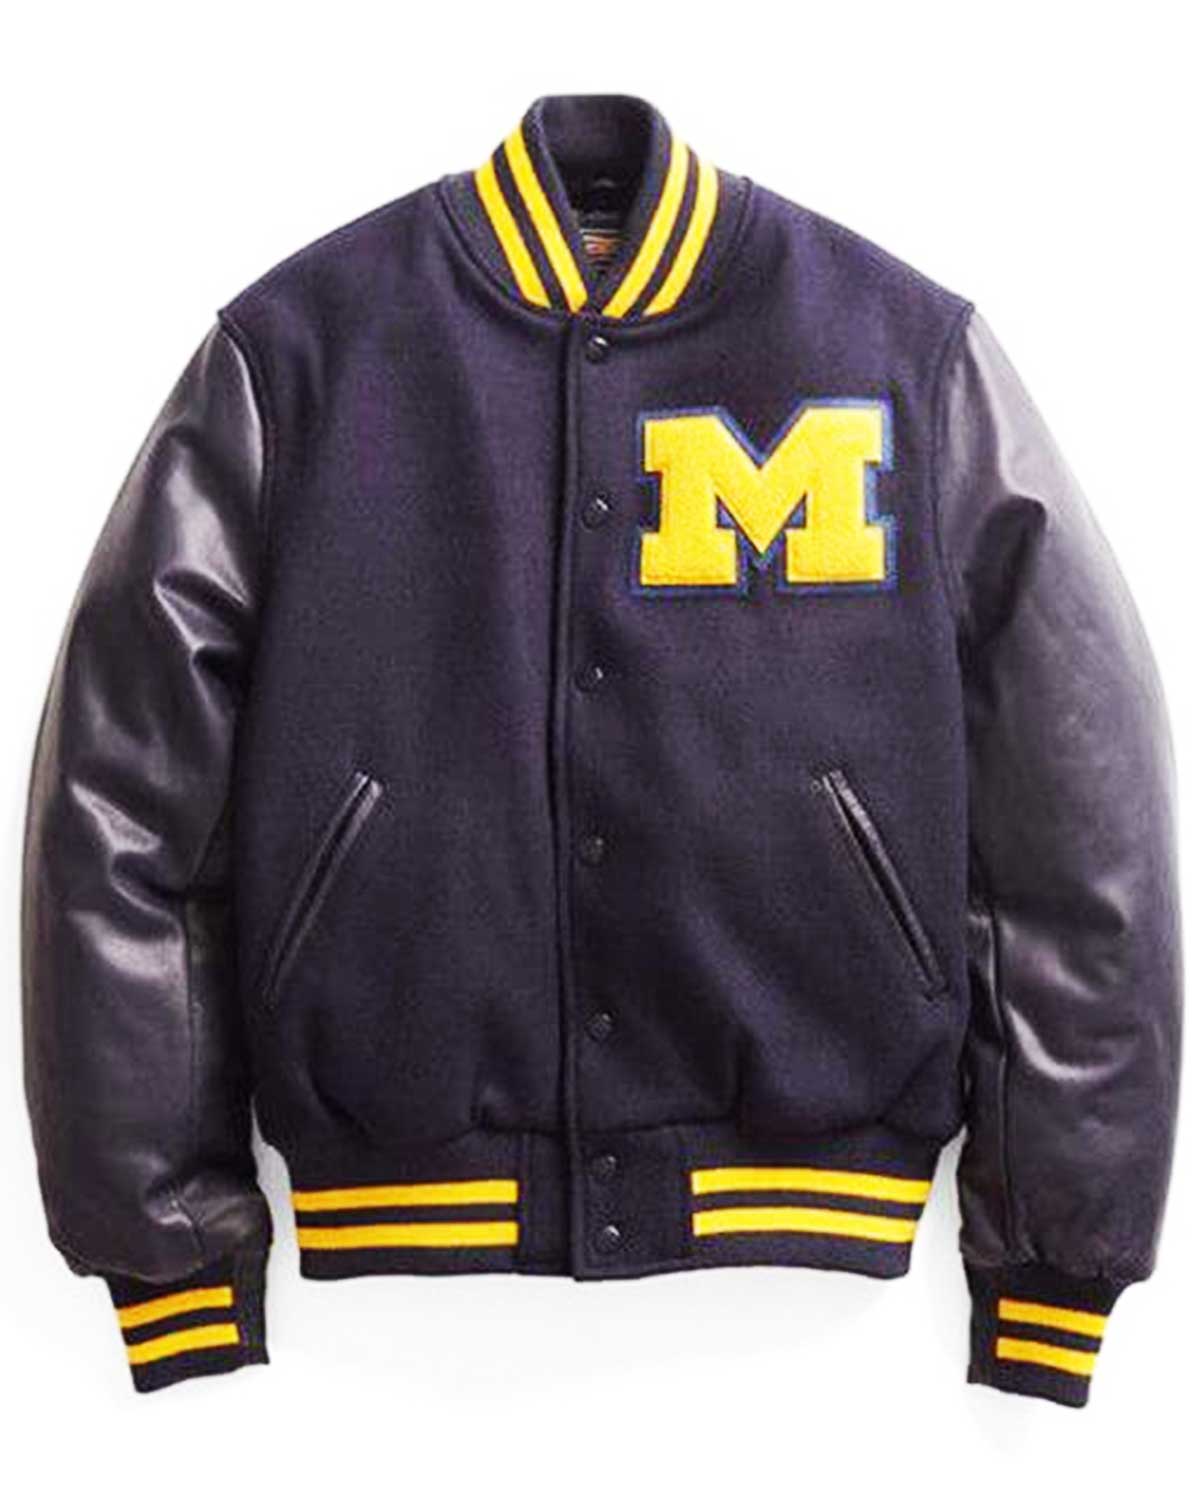 Elite Men’s Michigan Letterman Jacket